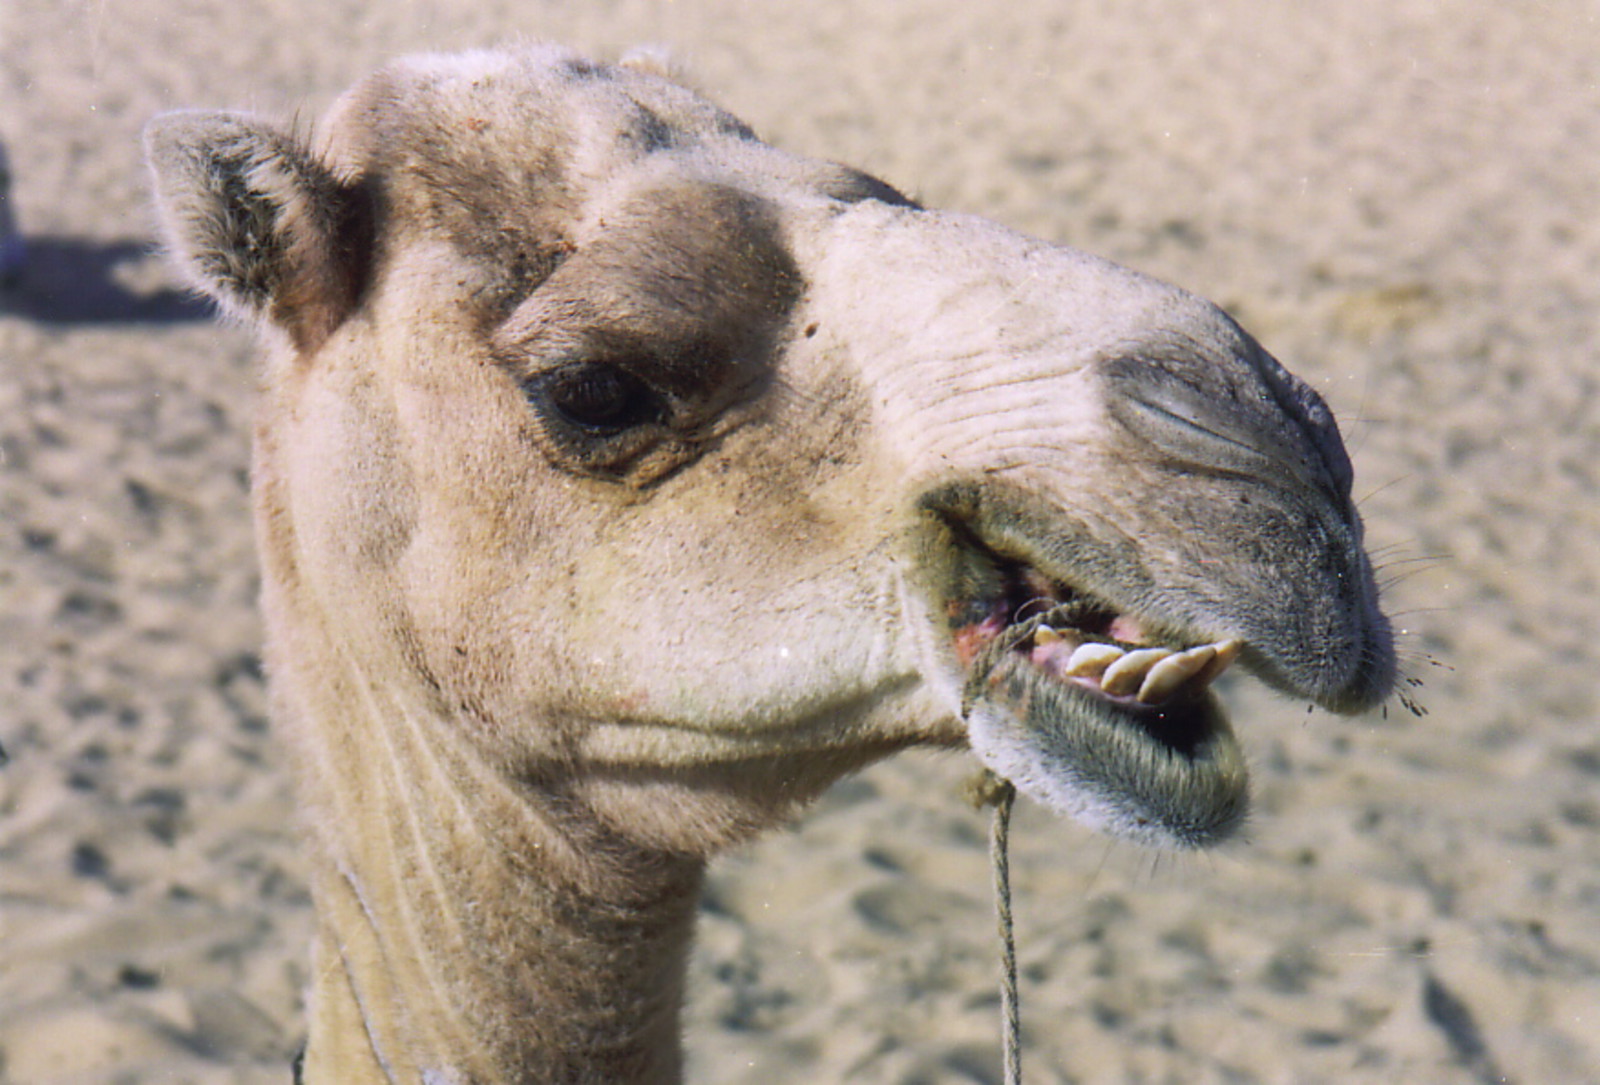 Owrah the camel